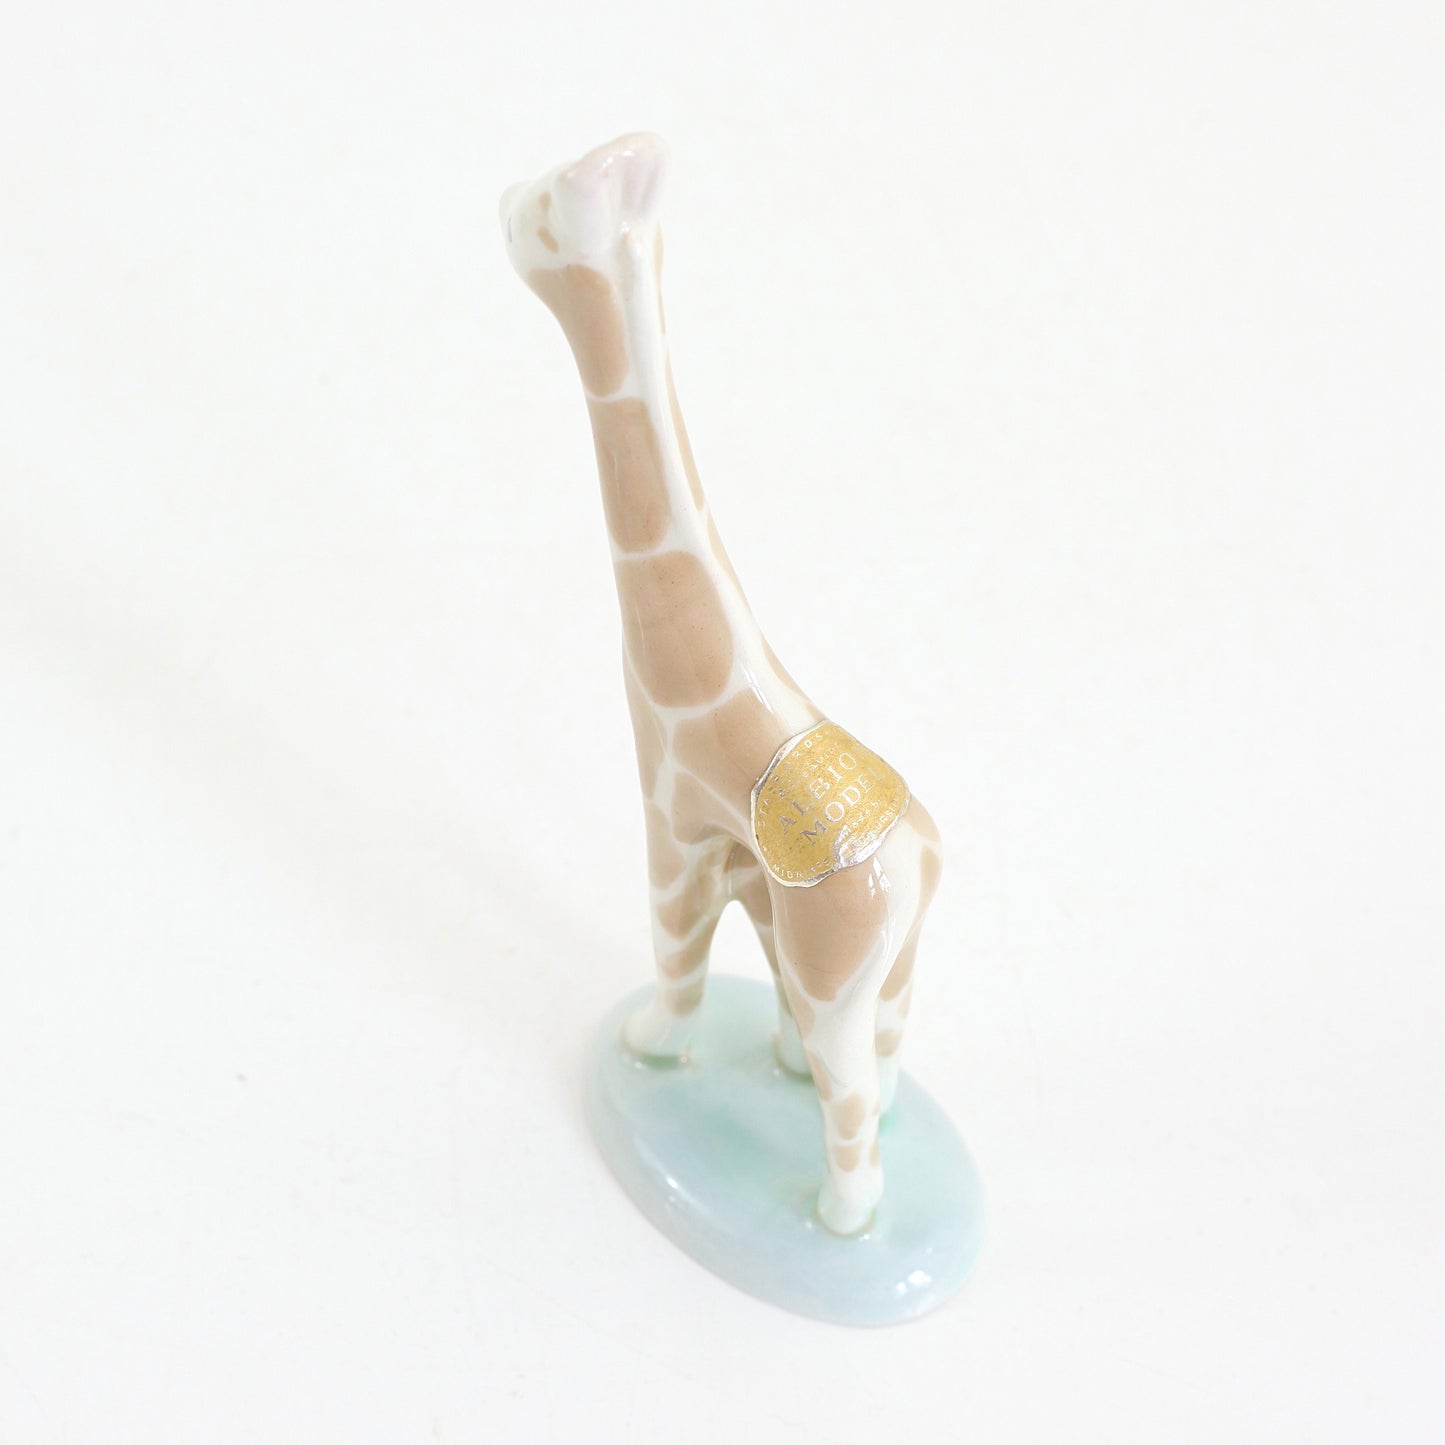 SOLD - Vintage Midwinter England Giraffe Figurine